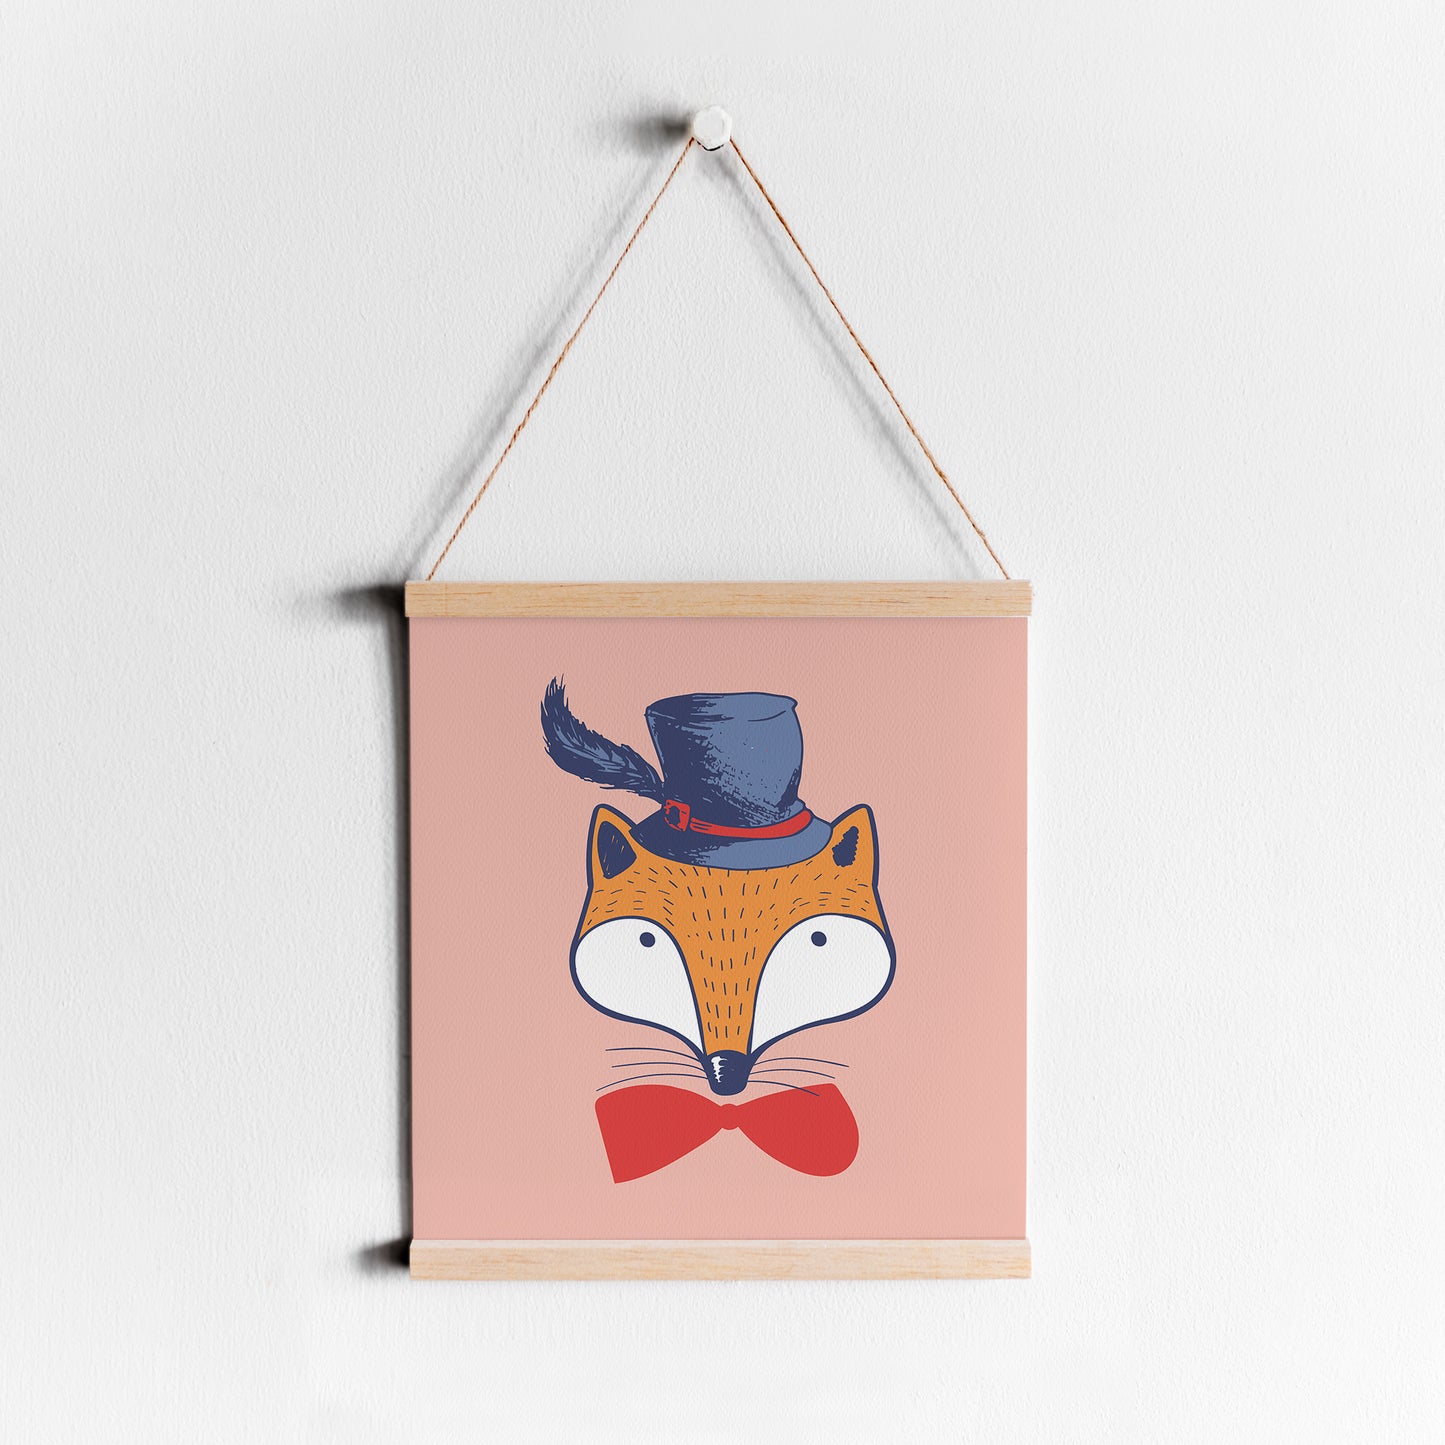 Mr. Fox Print